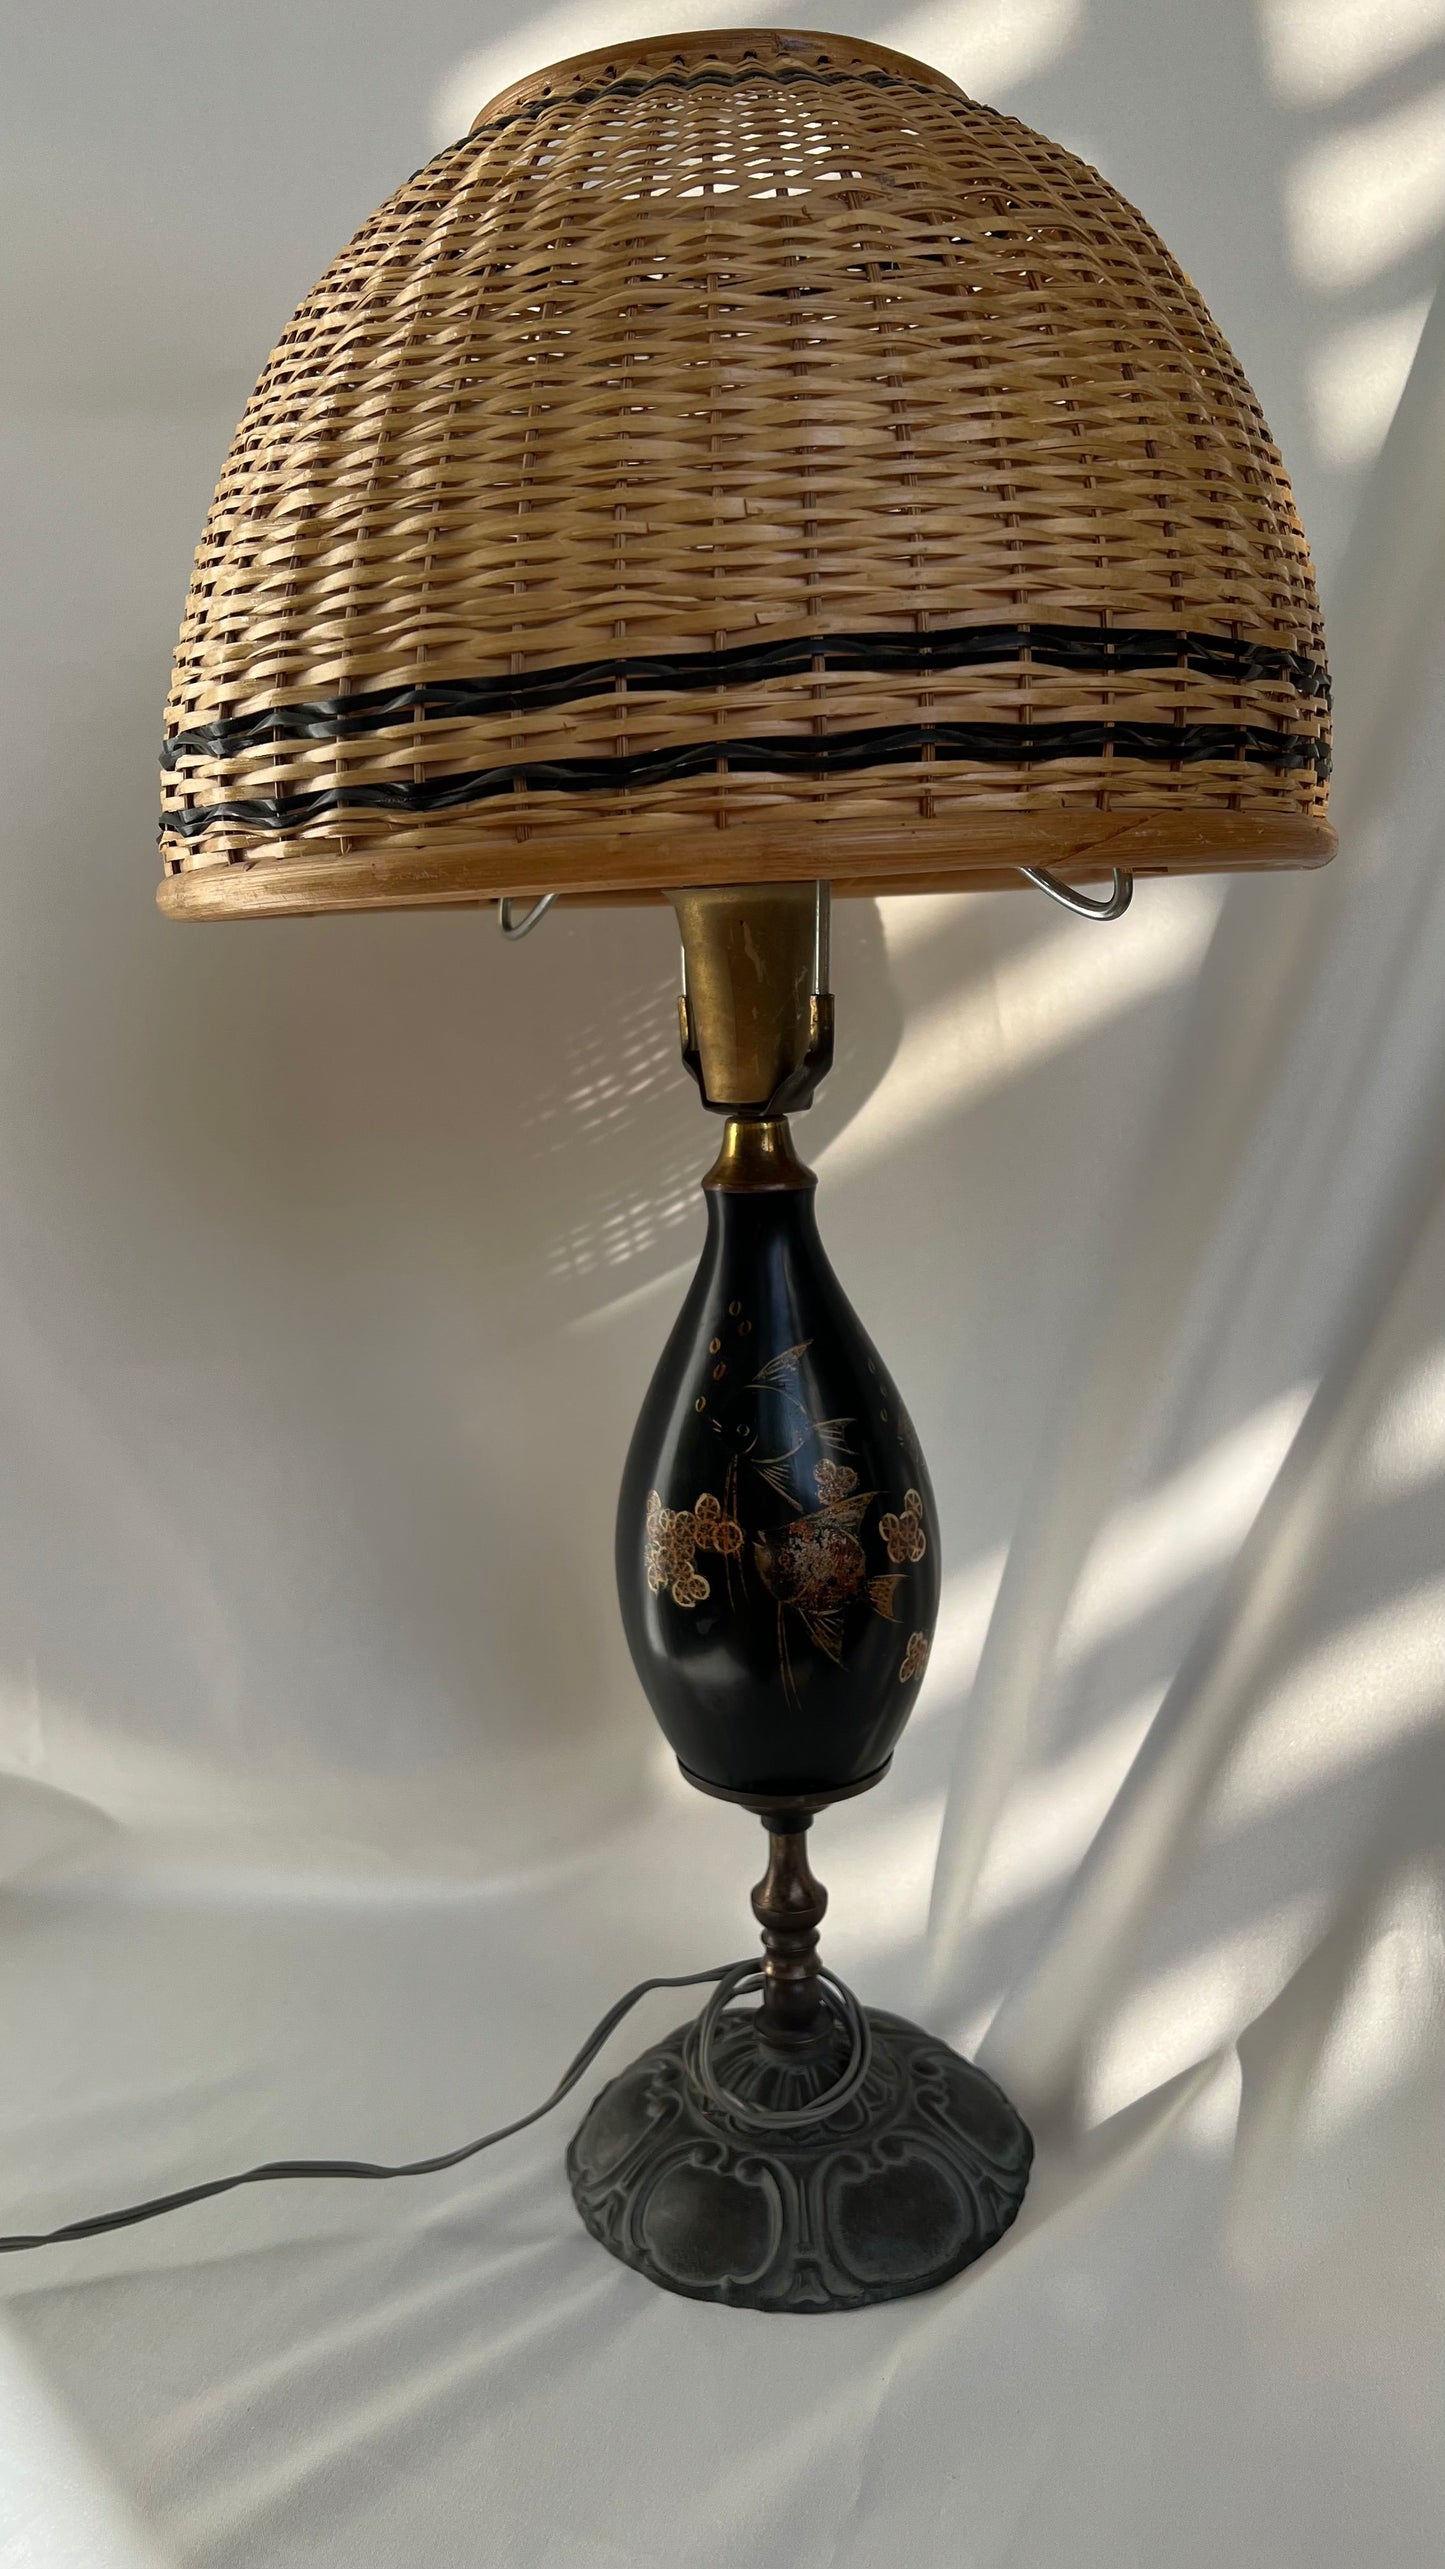 Boutique Lamp | מנורת בוטיק